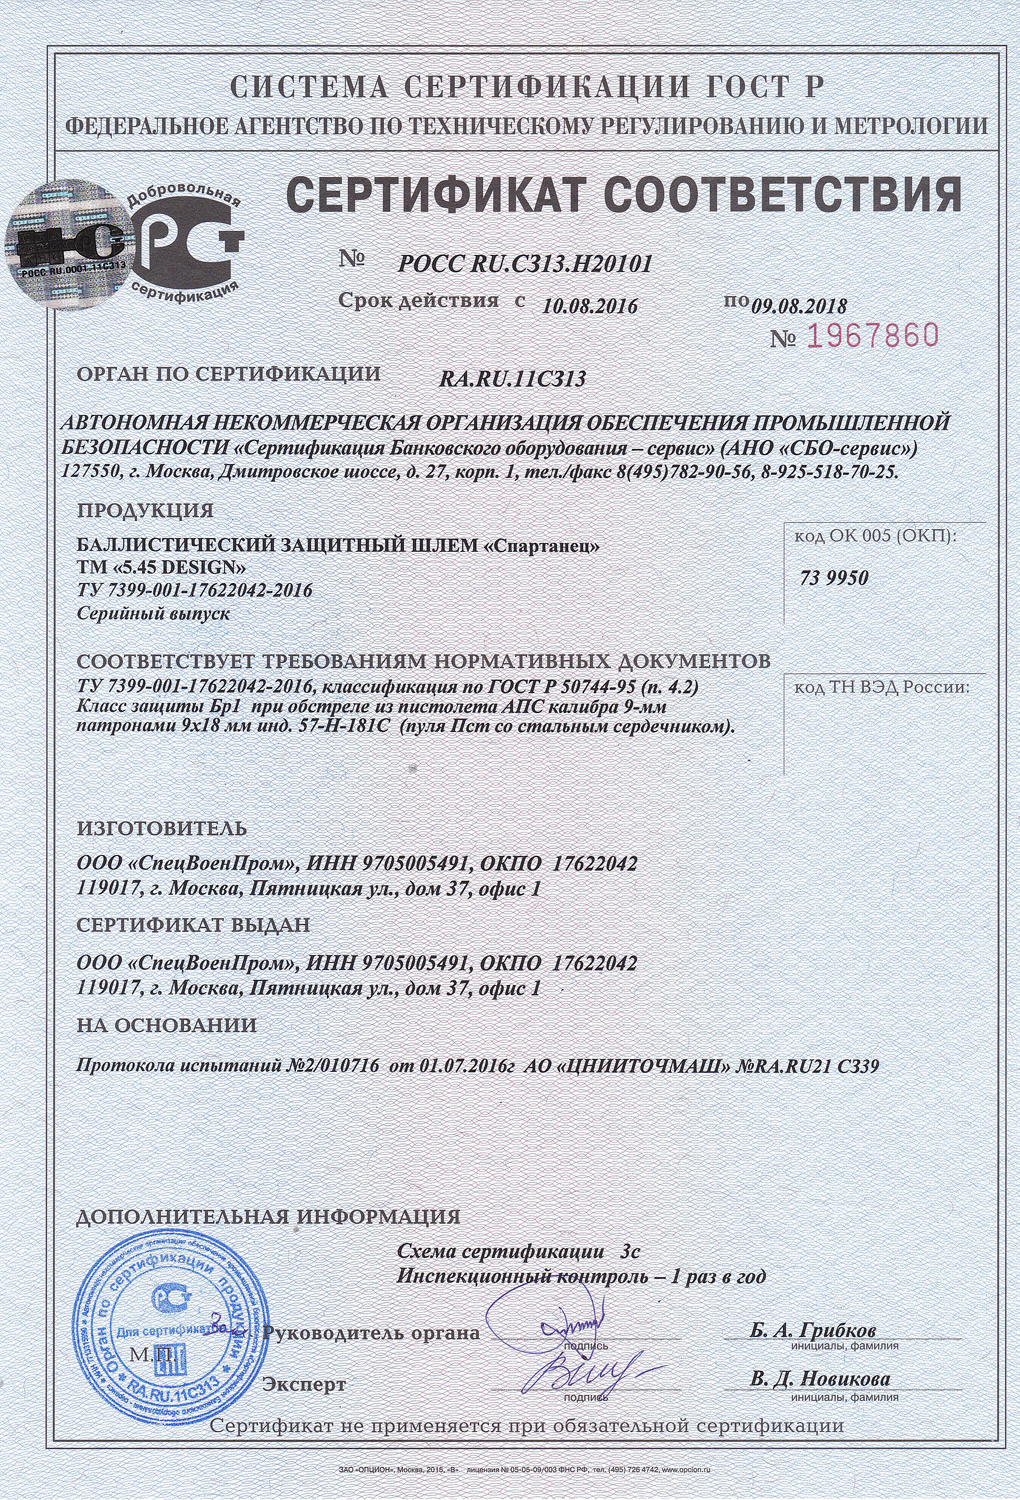 Сертификат шлема "Спартанец" 5.45 DESIGN